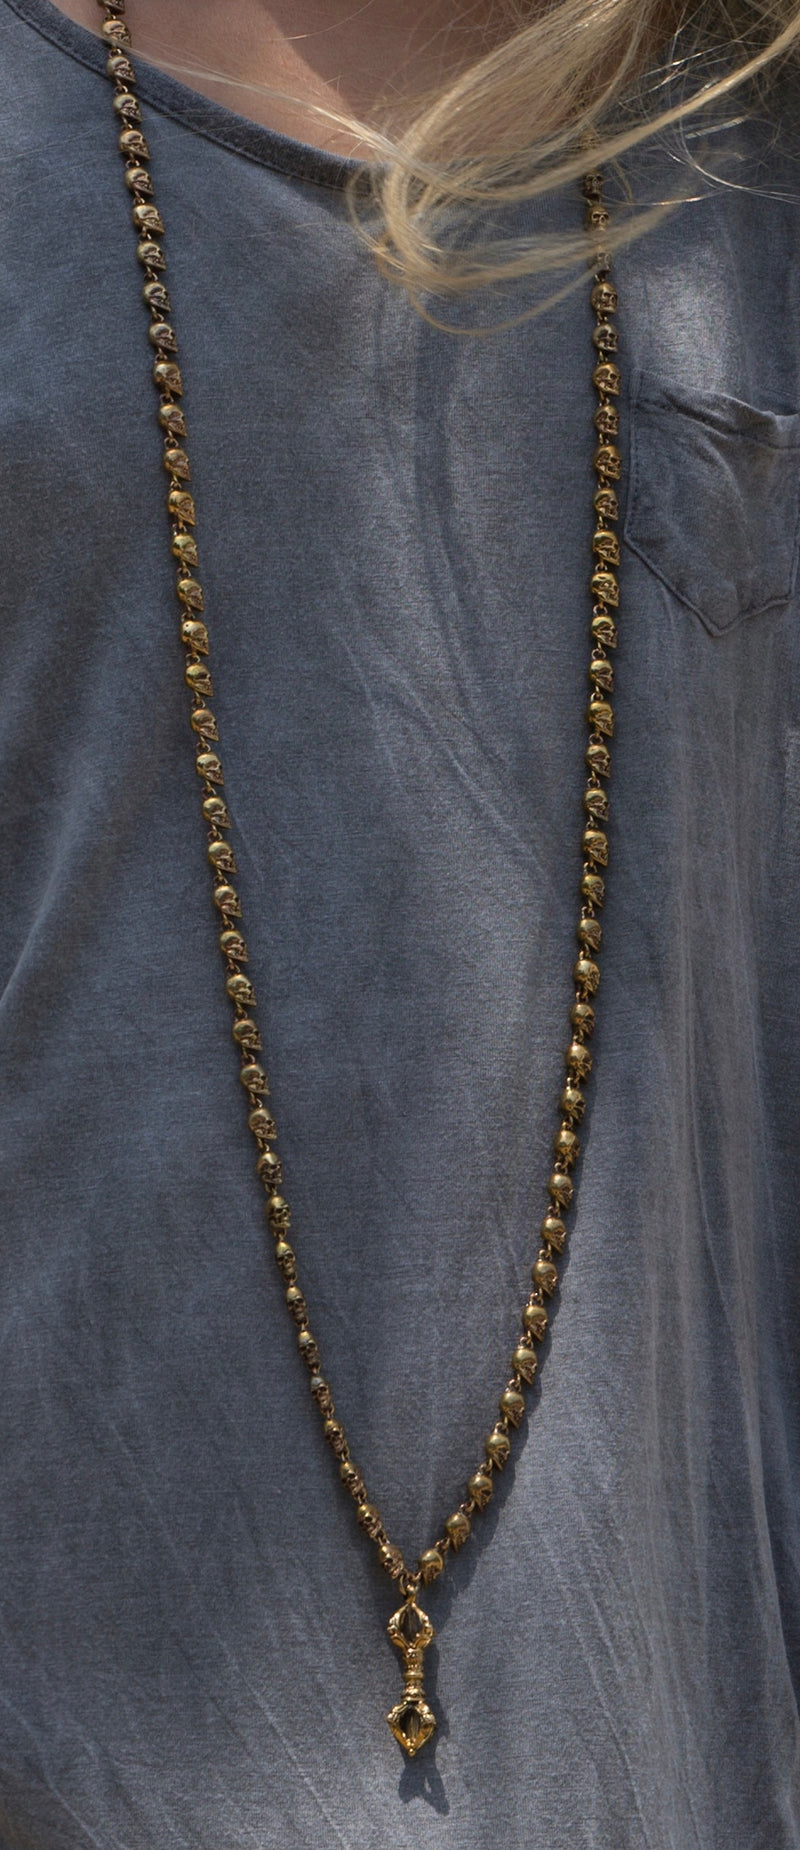 KALI MALA - Brass Skull Necklace - Hand-made 108 beads - Tibetan